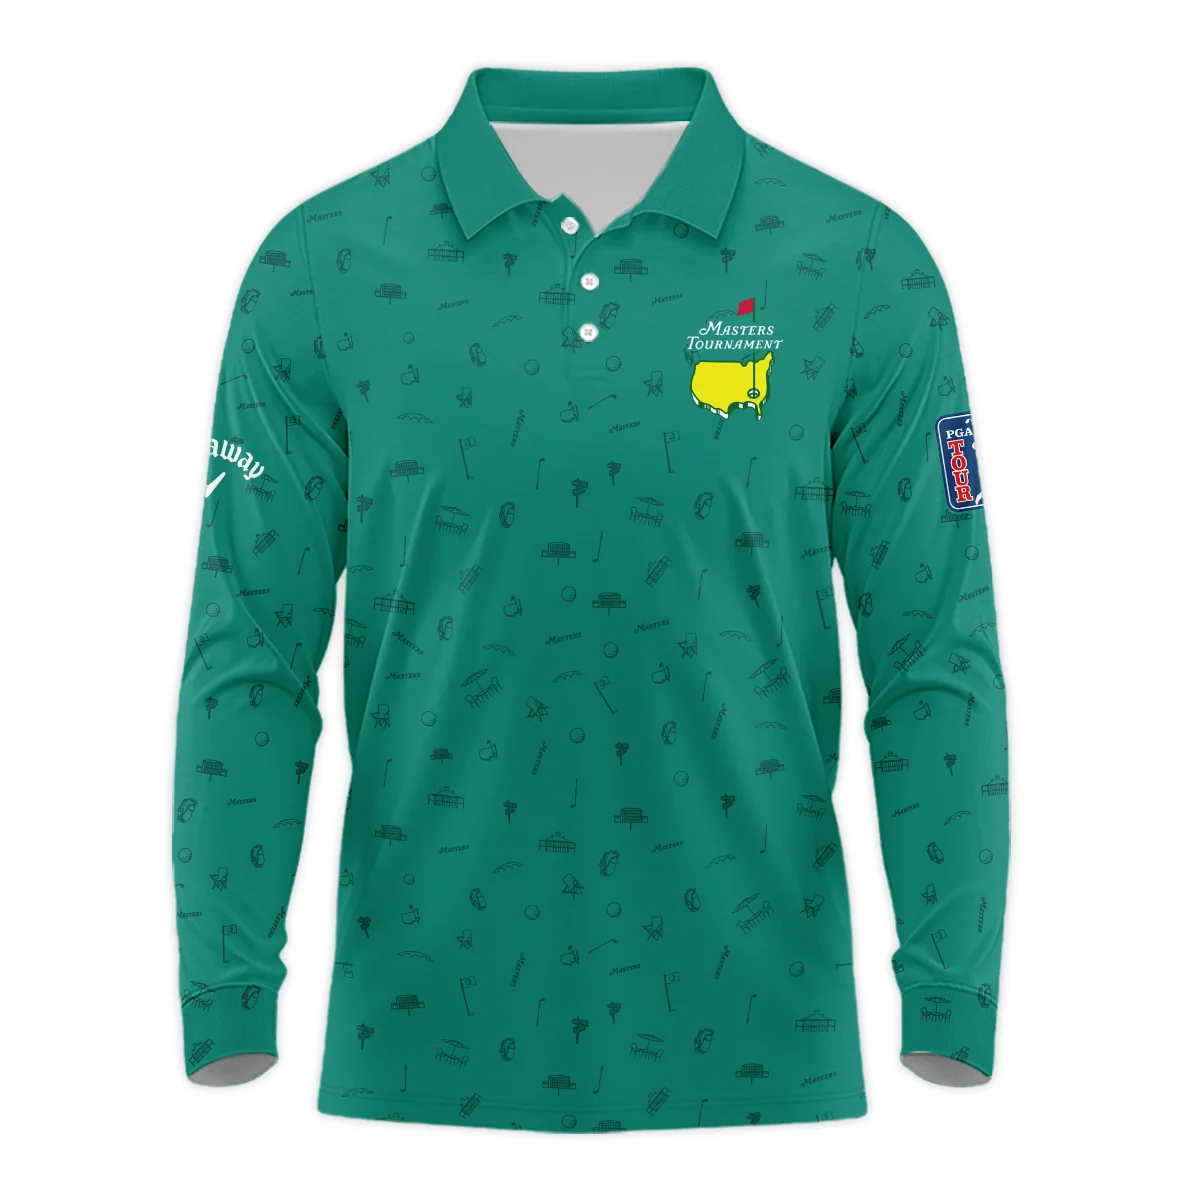 Golf Masters Tournament Callaway Unisex T-Shirt Augusta Icons Pattern Green Golf Sports All Over Print T-Shirt